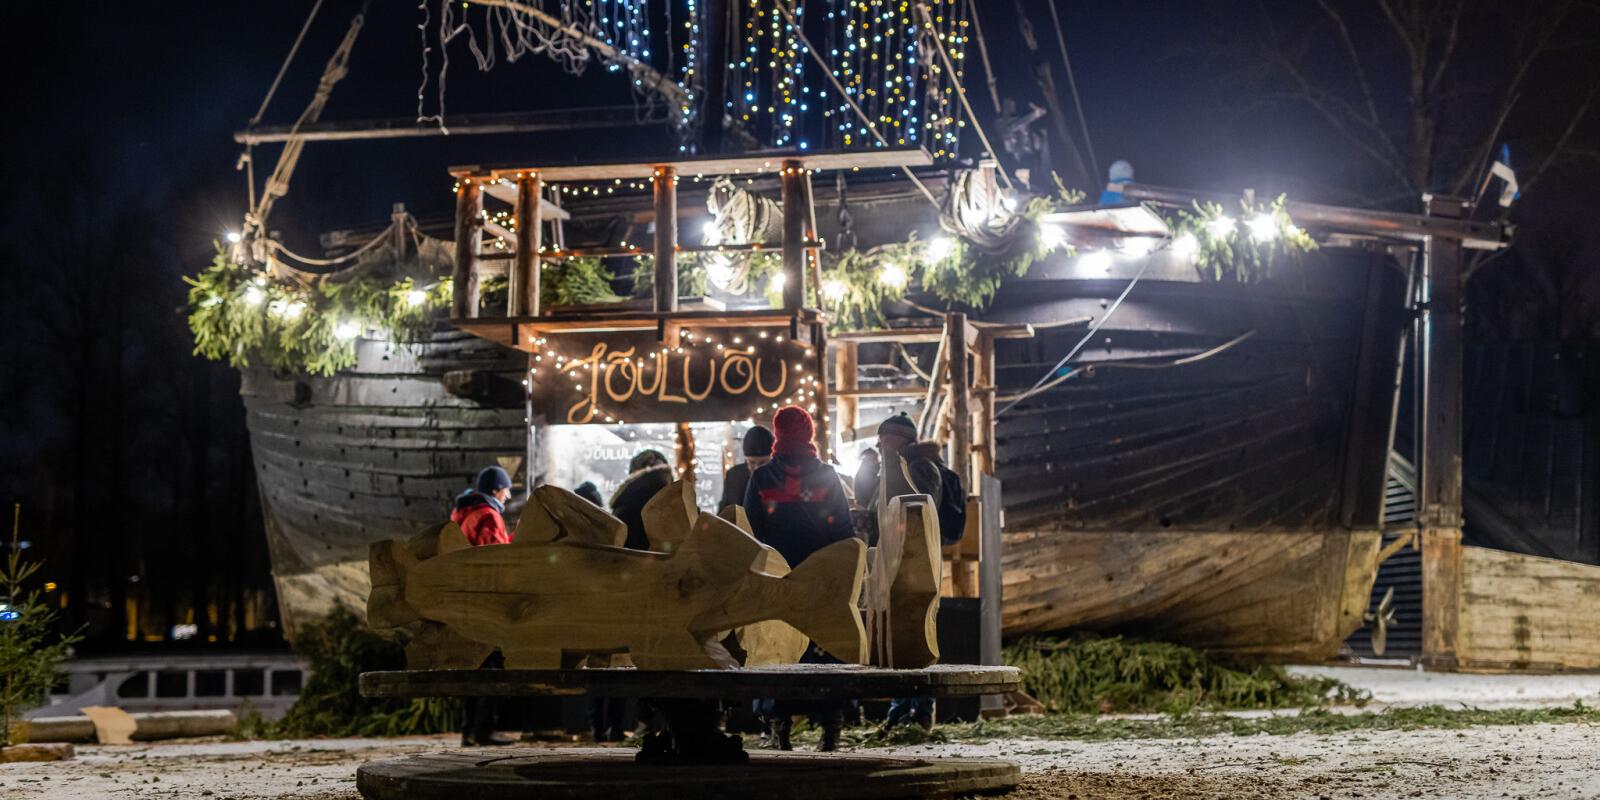 Lodjakoda (Barge Chamber) theme park during Christmas